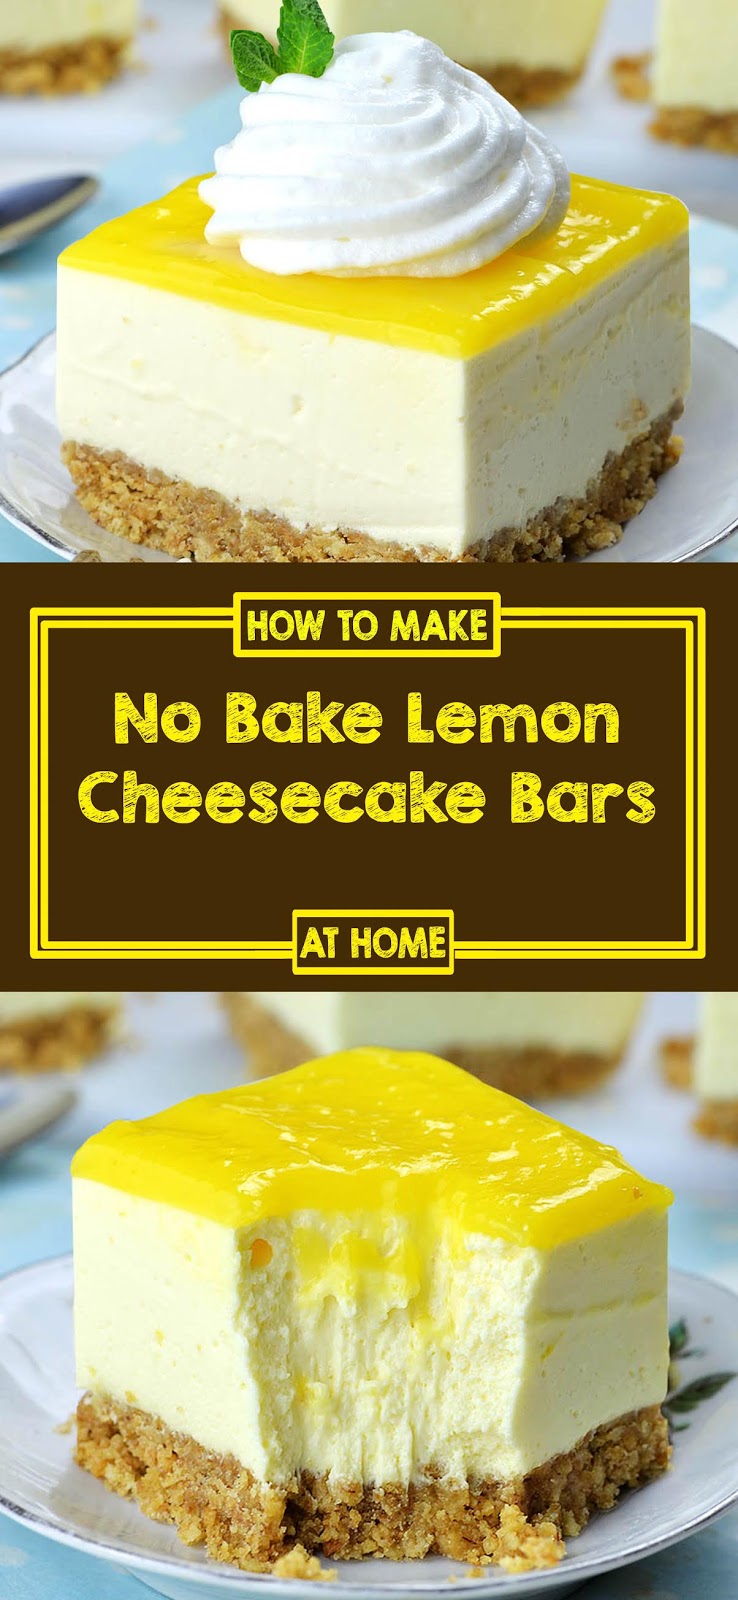 No Bake Lemon Cheesecake Bars - HEALTH and WELLNESS